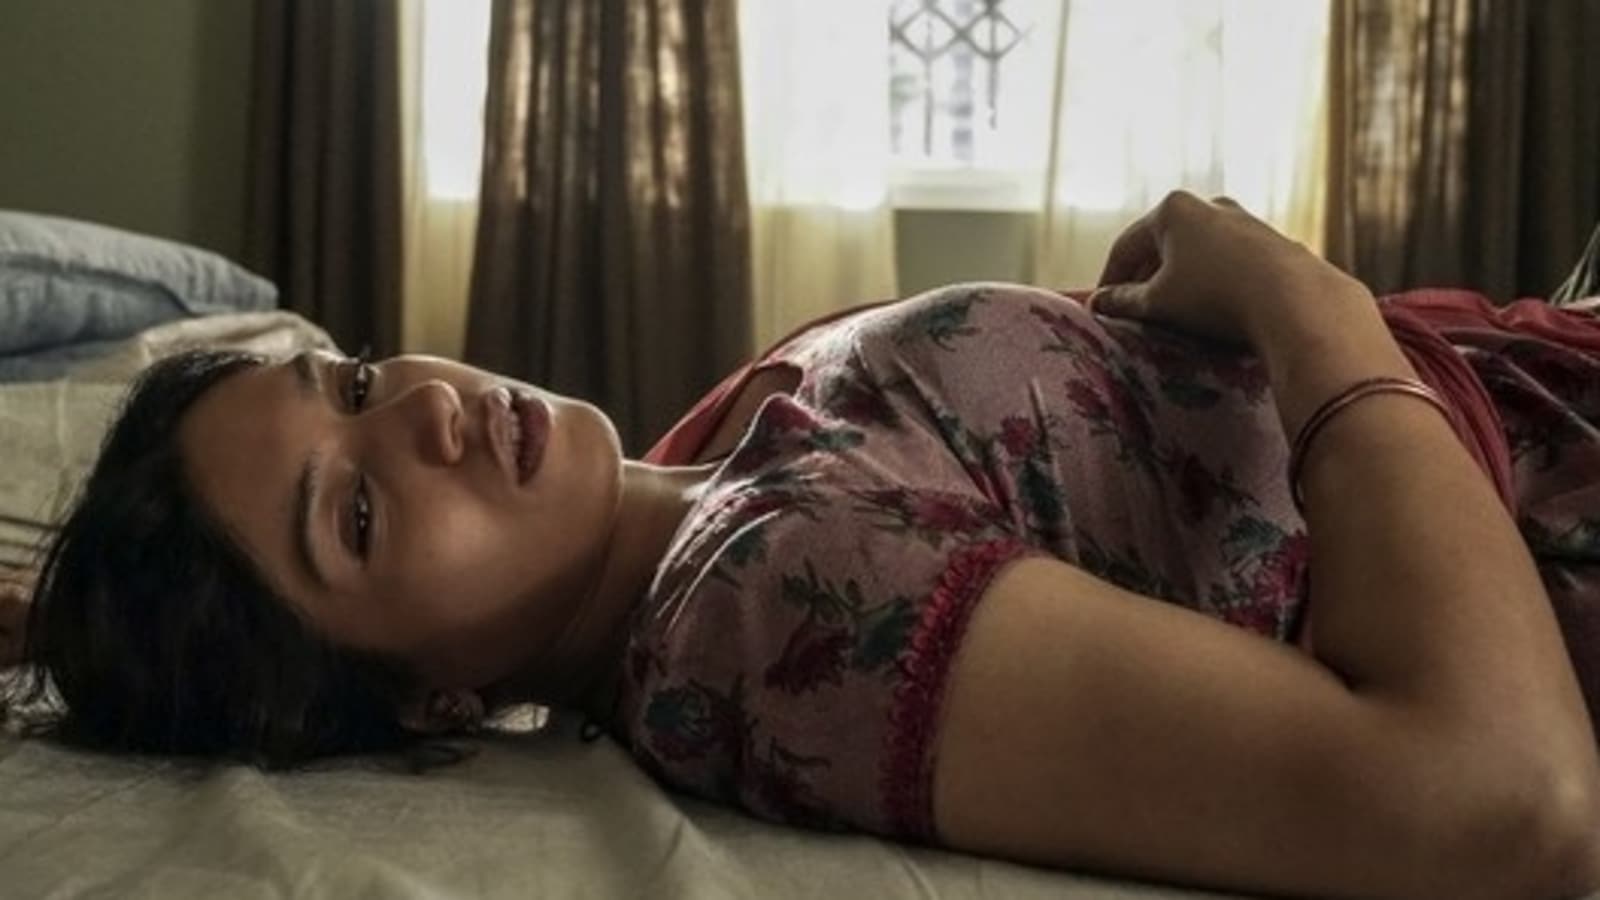 Nude Manisha Koirala - Bhumi Pednekar felt nervous about Lust Stories scenes: 'I barely had  clothes on' | Bollywood - Hindustan Times